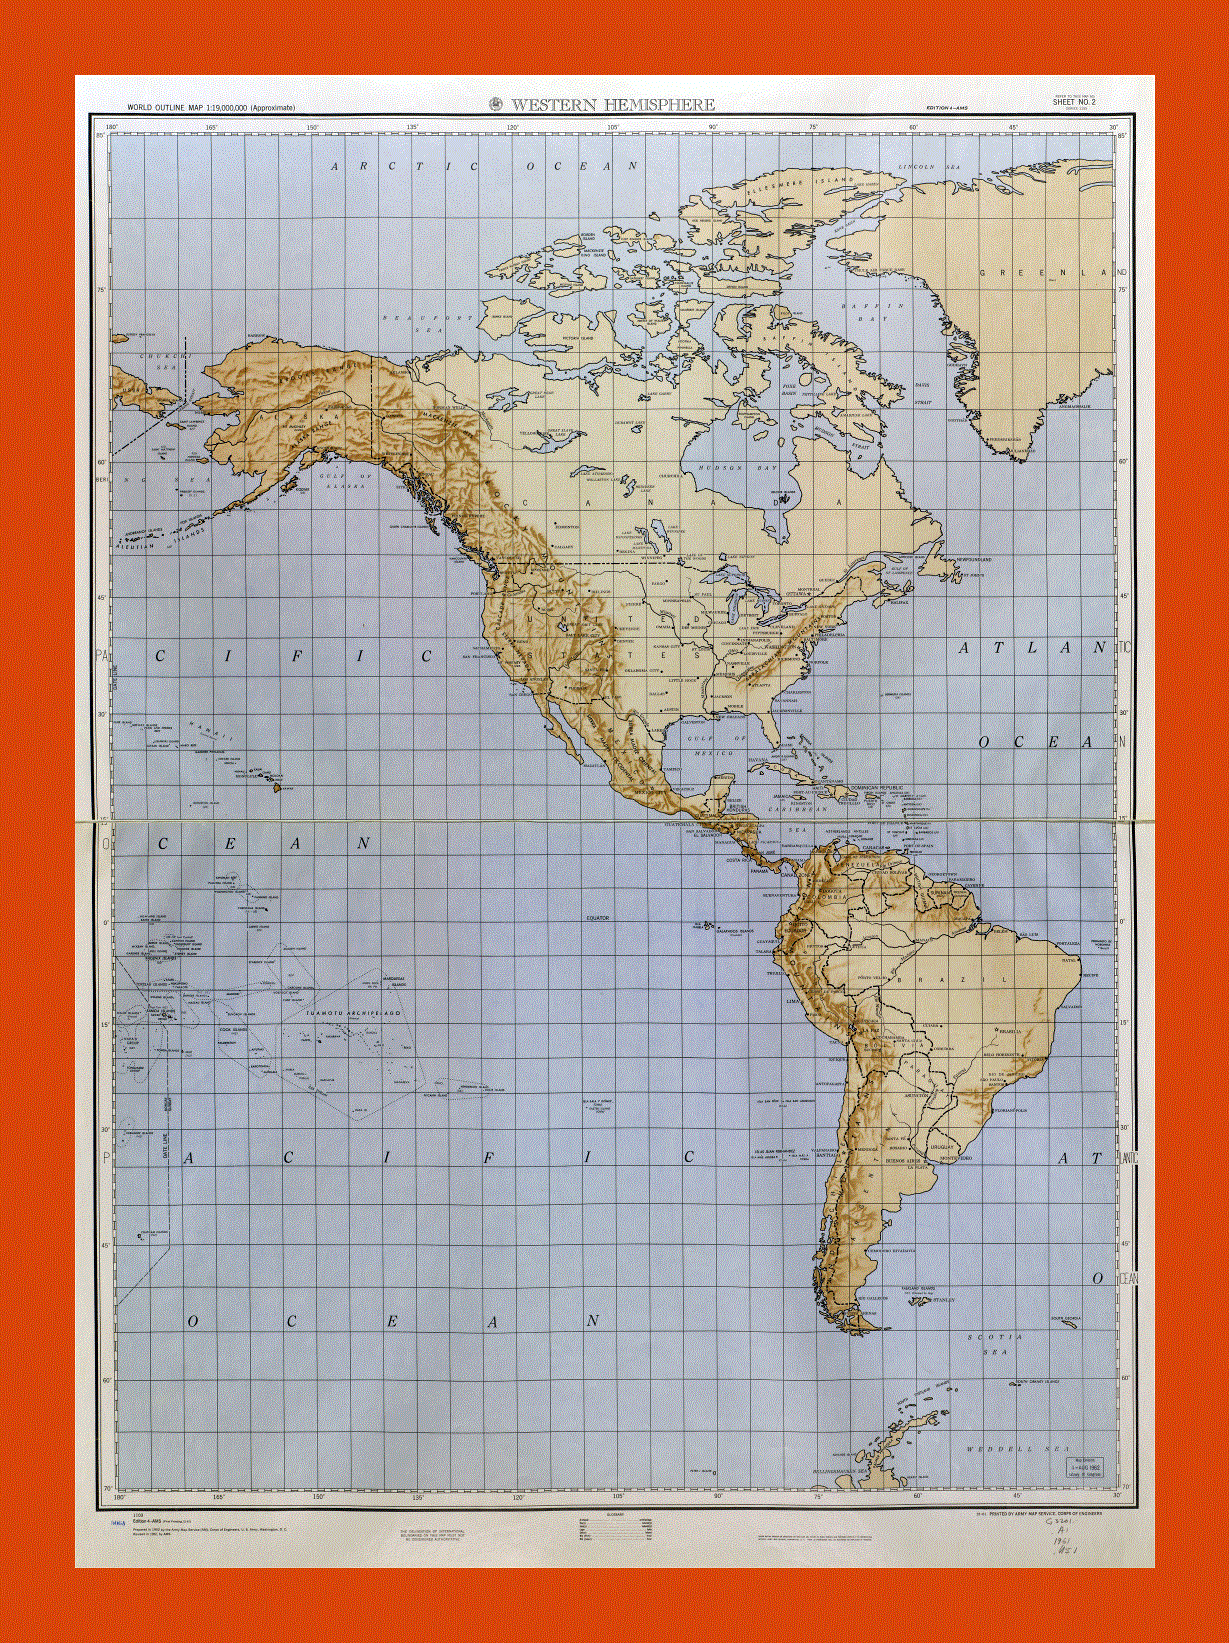 World outline map - part 1 (Western Hemisphere) 1961-62